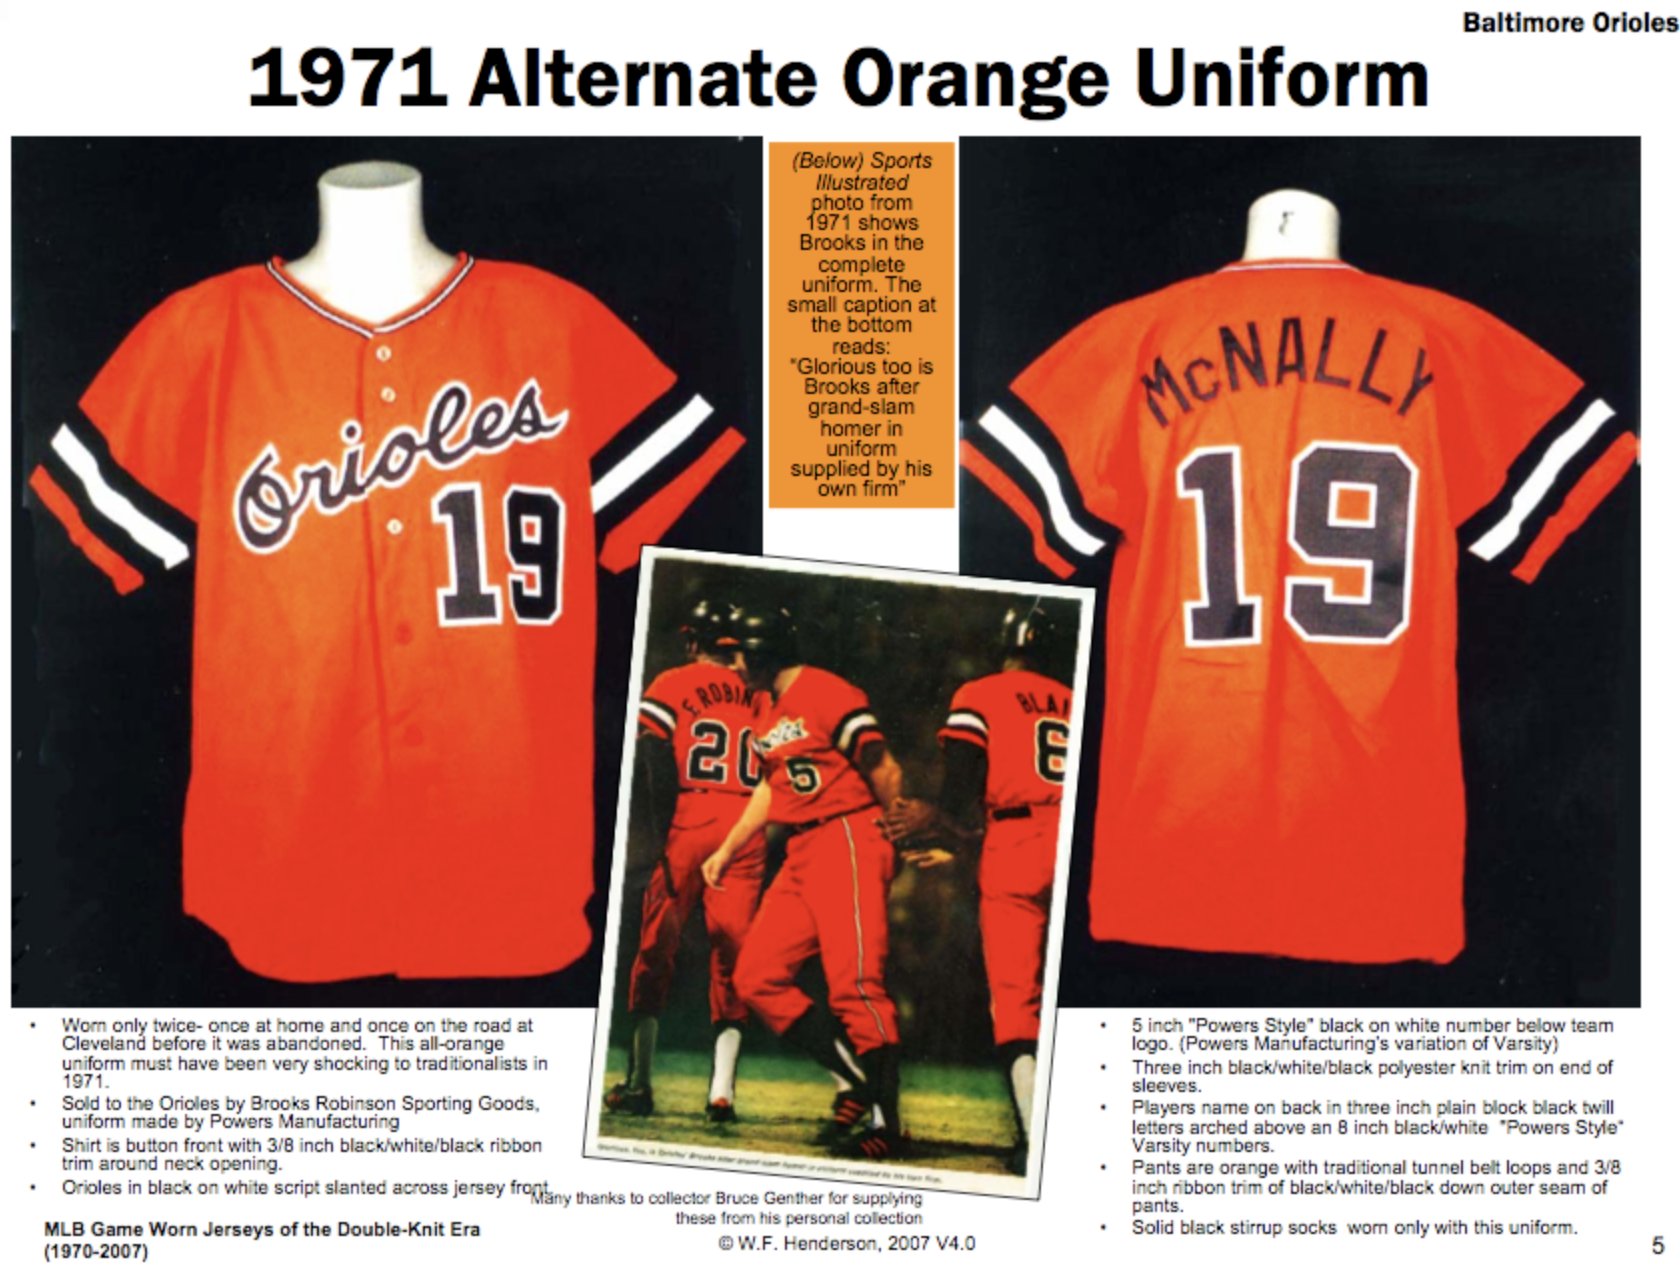 Orioles Magic on X: Back story: #Orioles epic all-orange unis